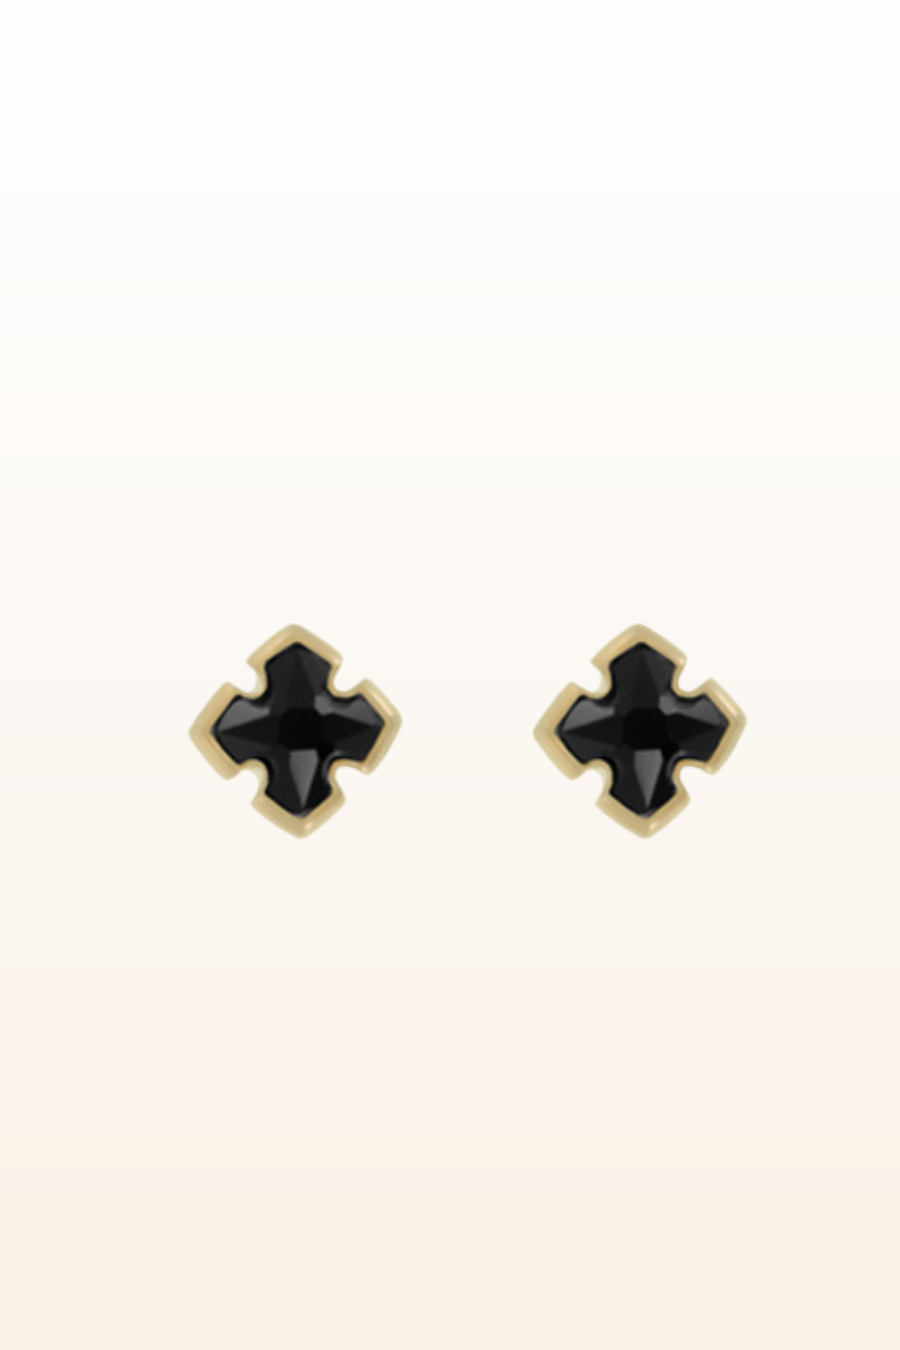 Matt Gold Small Cross Post Earrings